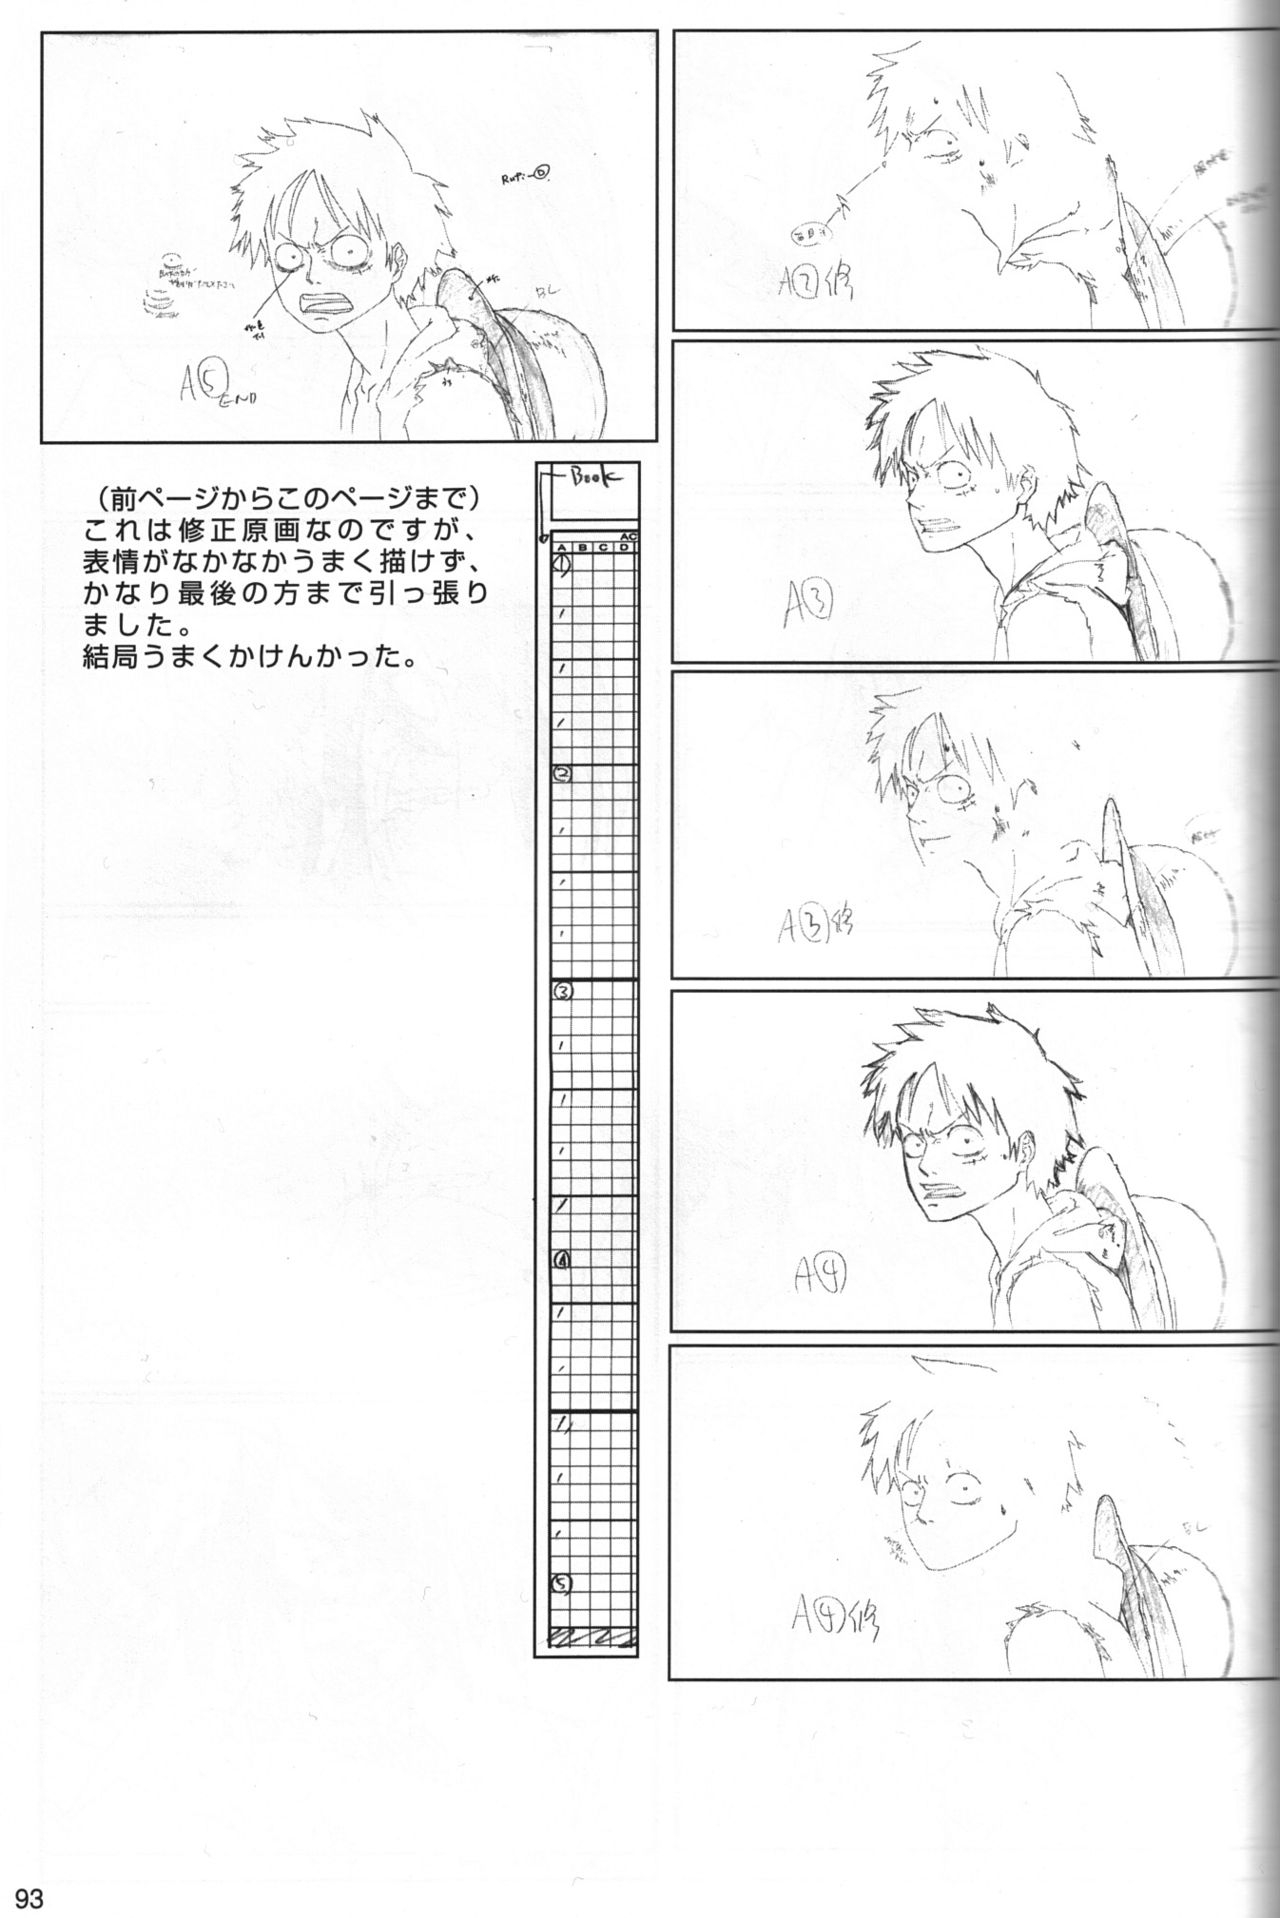 [Artbook] Sushio One Piece Movie 06 - Pencil Test and Design Book 91